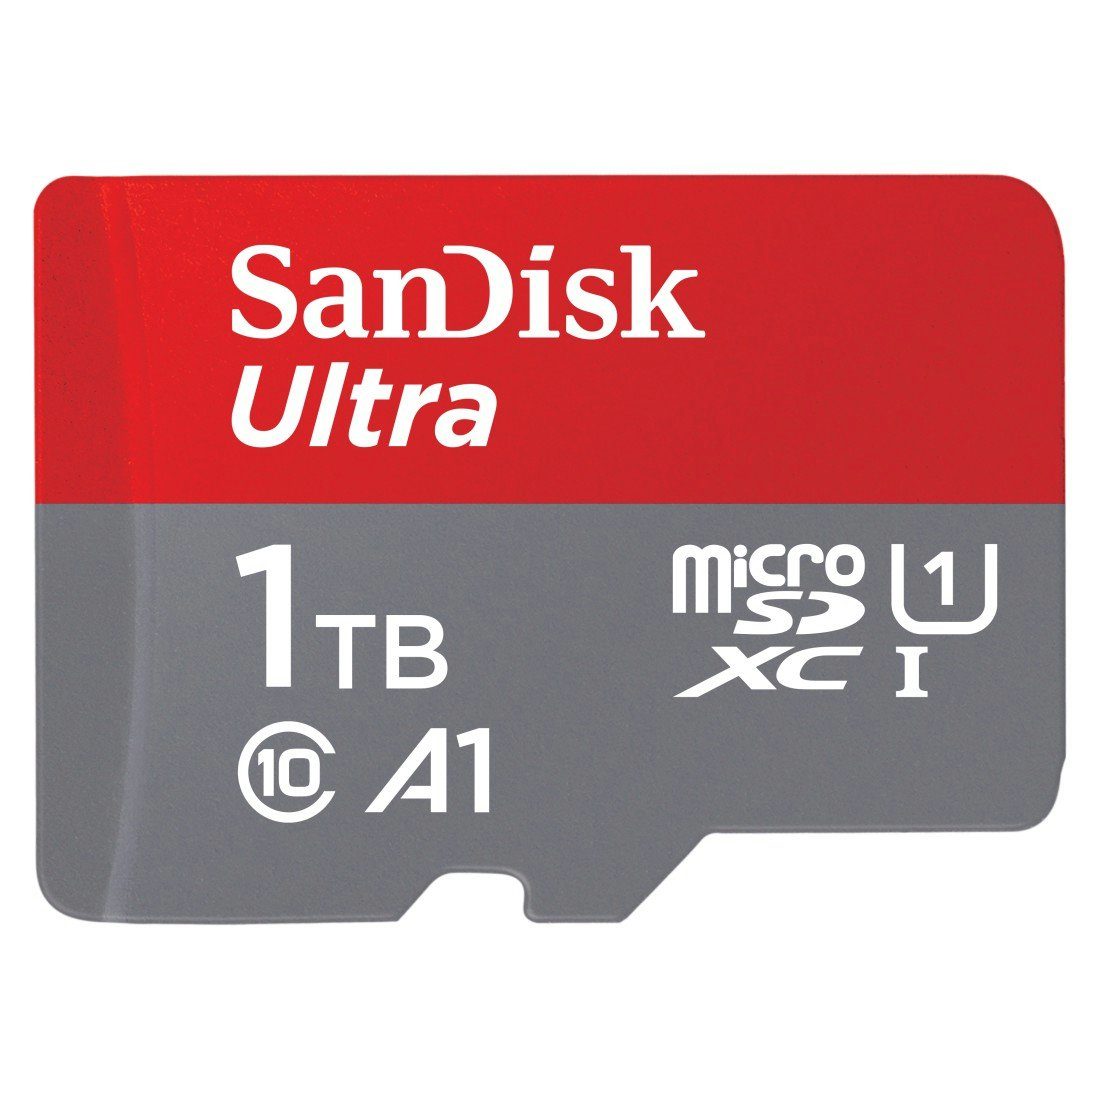 Sandisk microSDXC Ultra 1TB Speicherkarte (1000 GB, UHS-I Class 10, 150 MB/s Lesegeschwindigkeit)